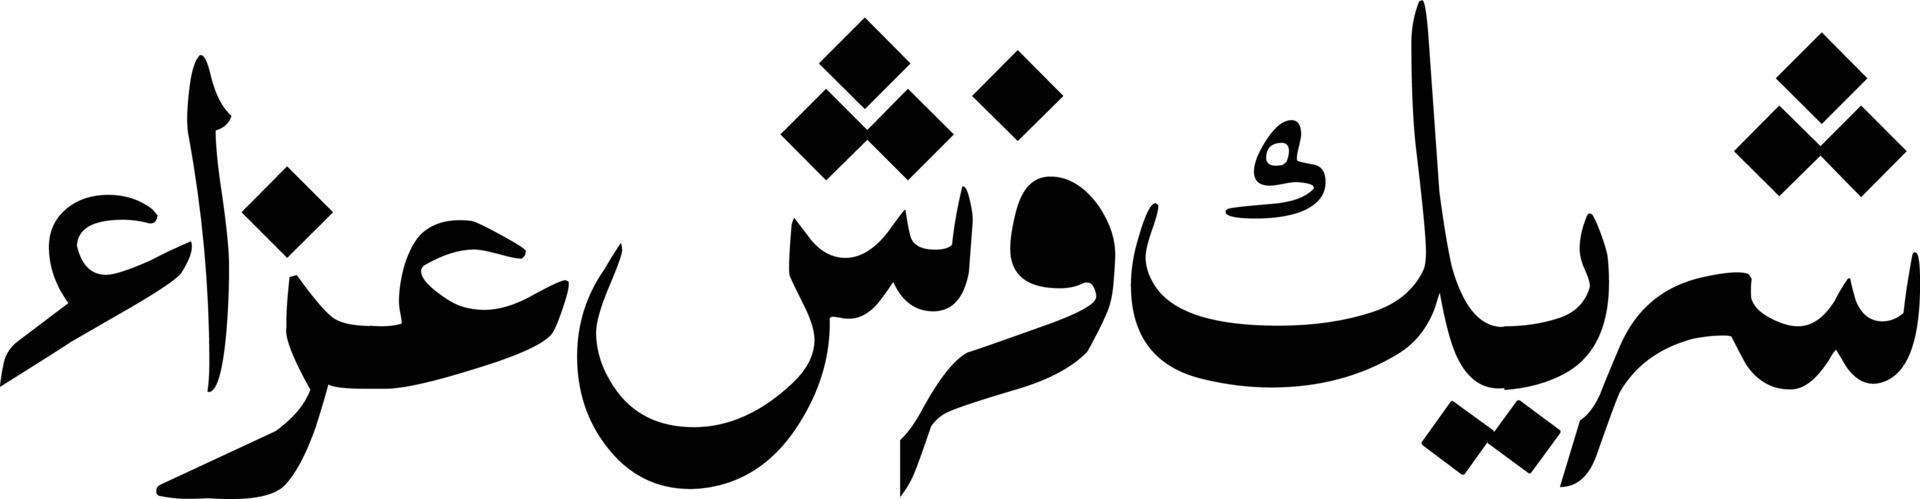 shreek farsh aza calligraphie arabe islamique vecteur gratuit